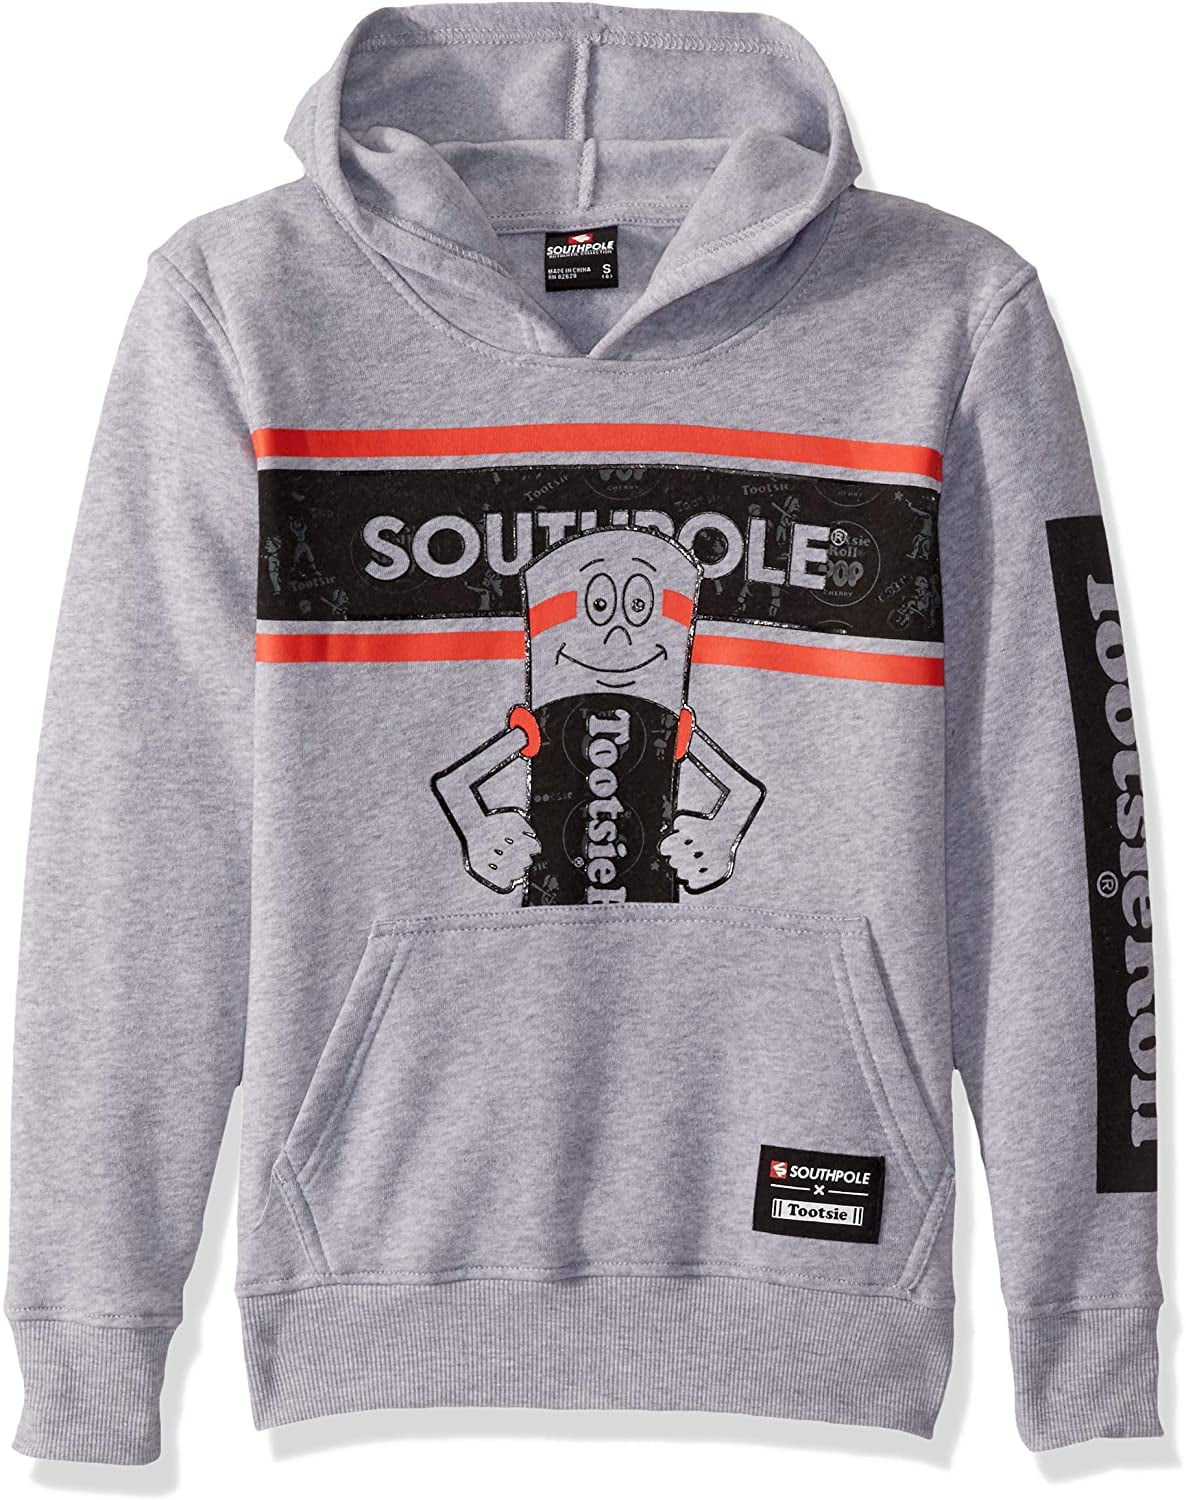 Hoody,Crewneck Southpole Mens Tootsie Fashion Fleece Sweatshirt Sweatshirt